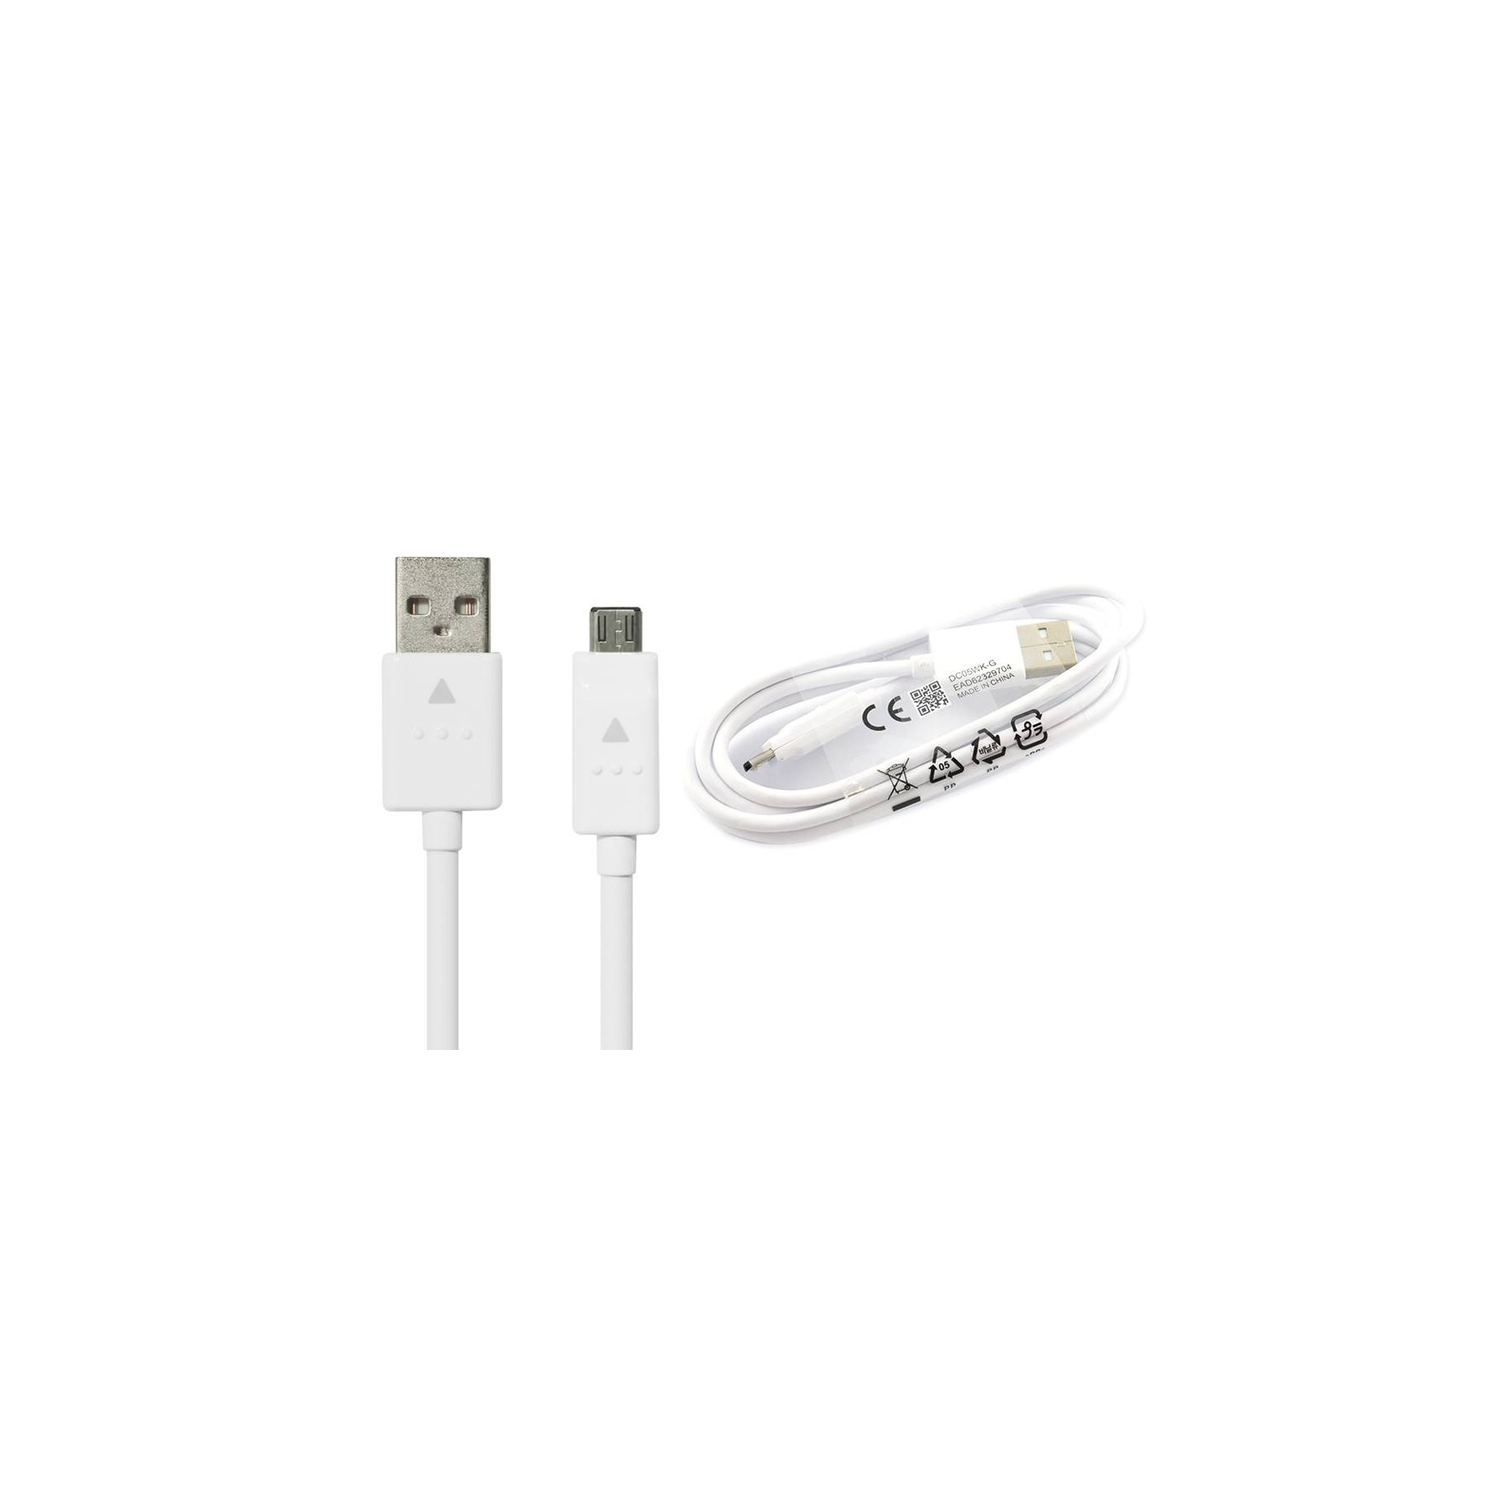 LG 3.3Ft/1M Micro USB Data Charge Cable for LG G2 / G3 / G4 / G Flex / Nexus 4 / Nexus 5, White